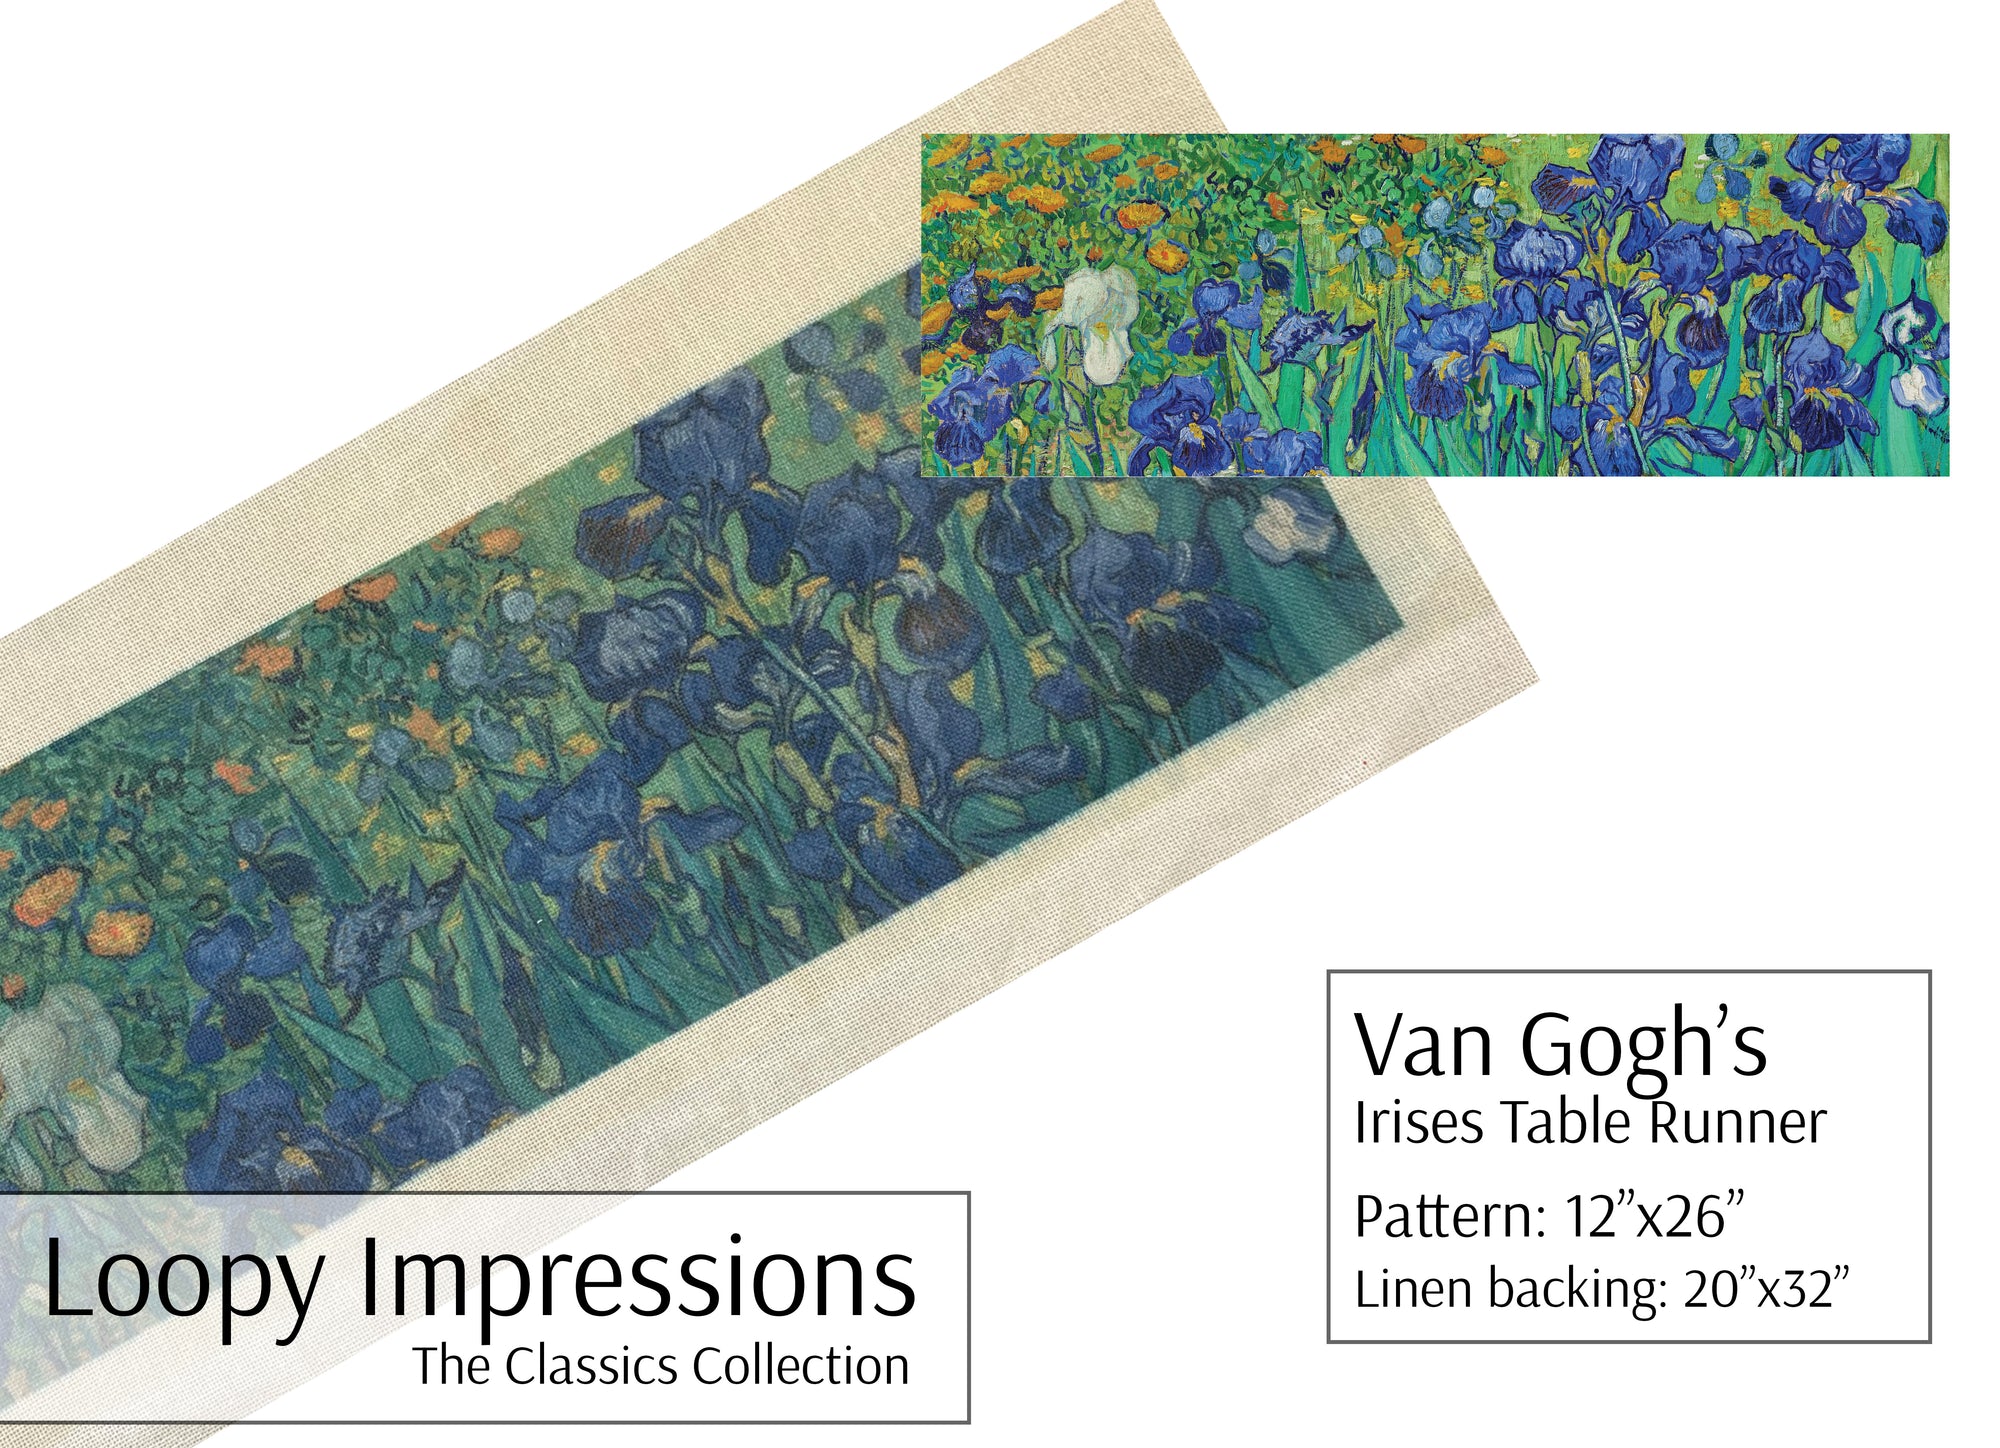 Loopy Impressions Van Gogh's Irises Table Runner